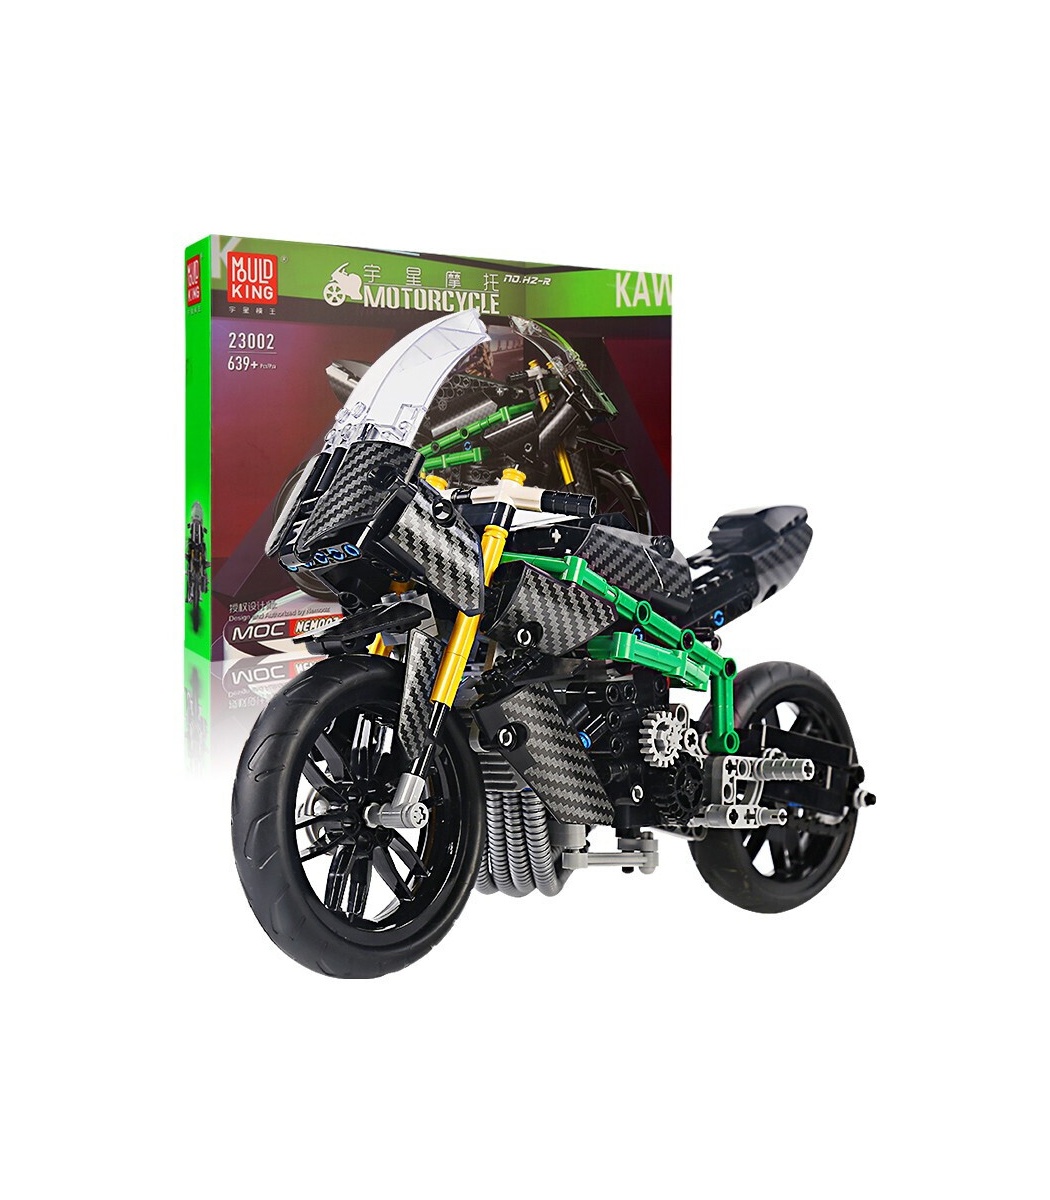 MOULD KING 23002 Kawasaki H2-R Motorcycle Building Blocks Toy Set 